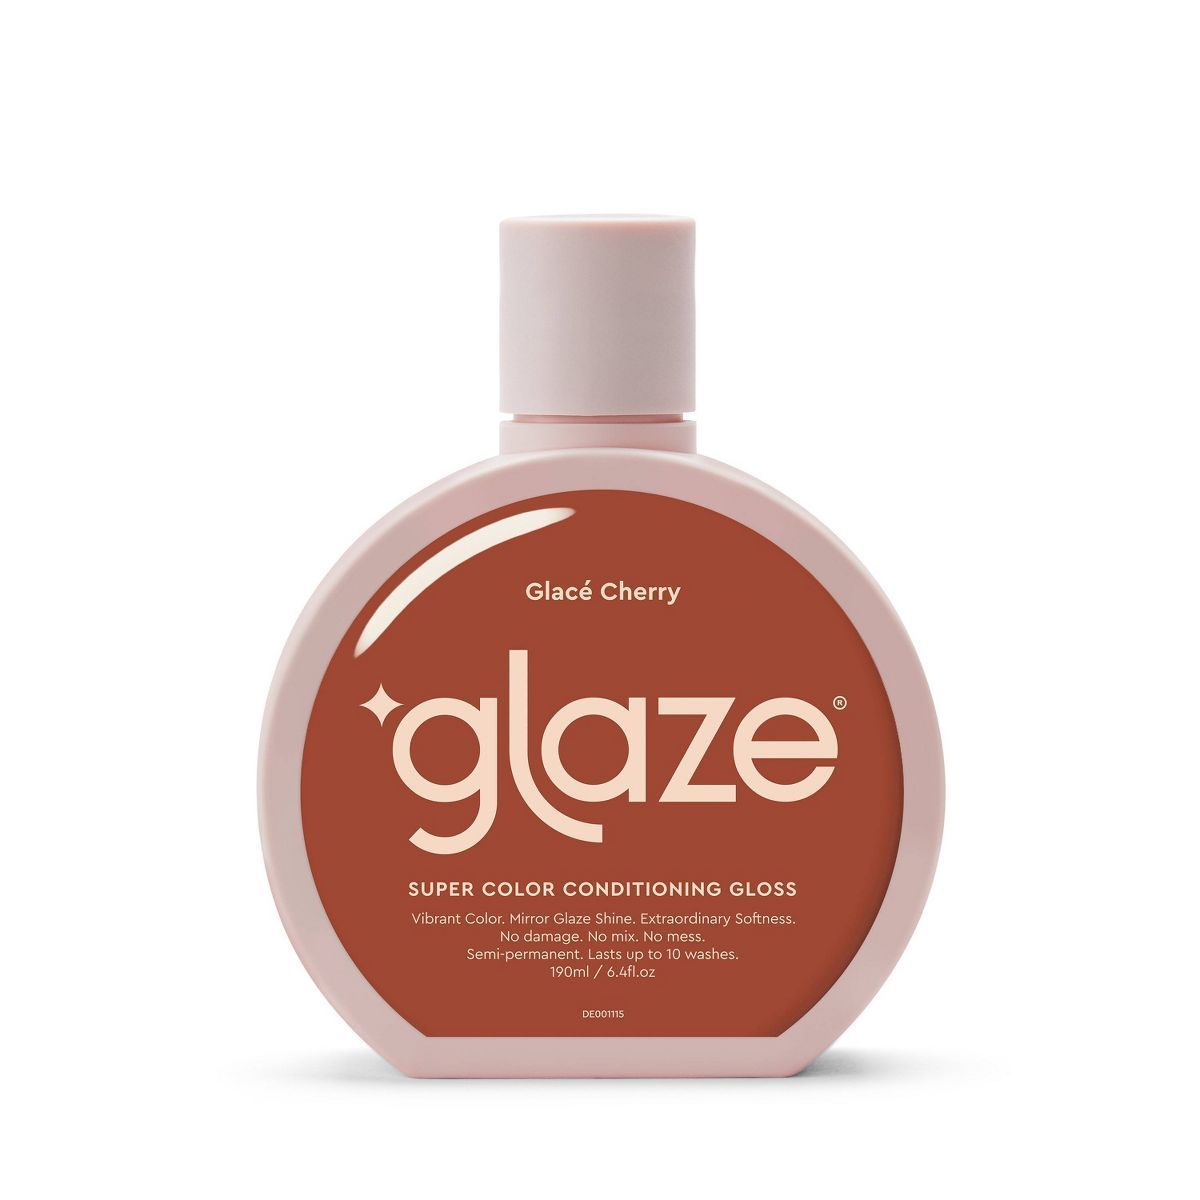 Glaze Super Hair Gloss - 6.4 fl oz | Target